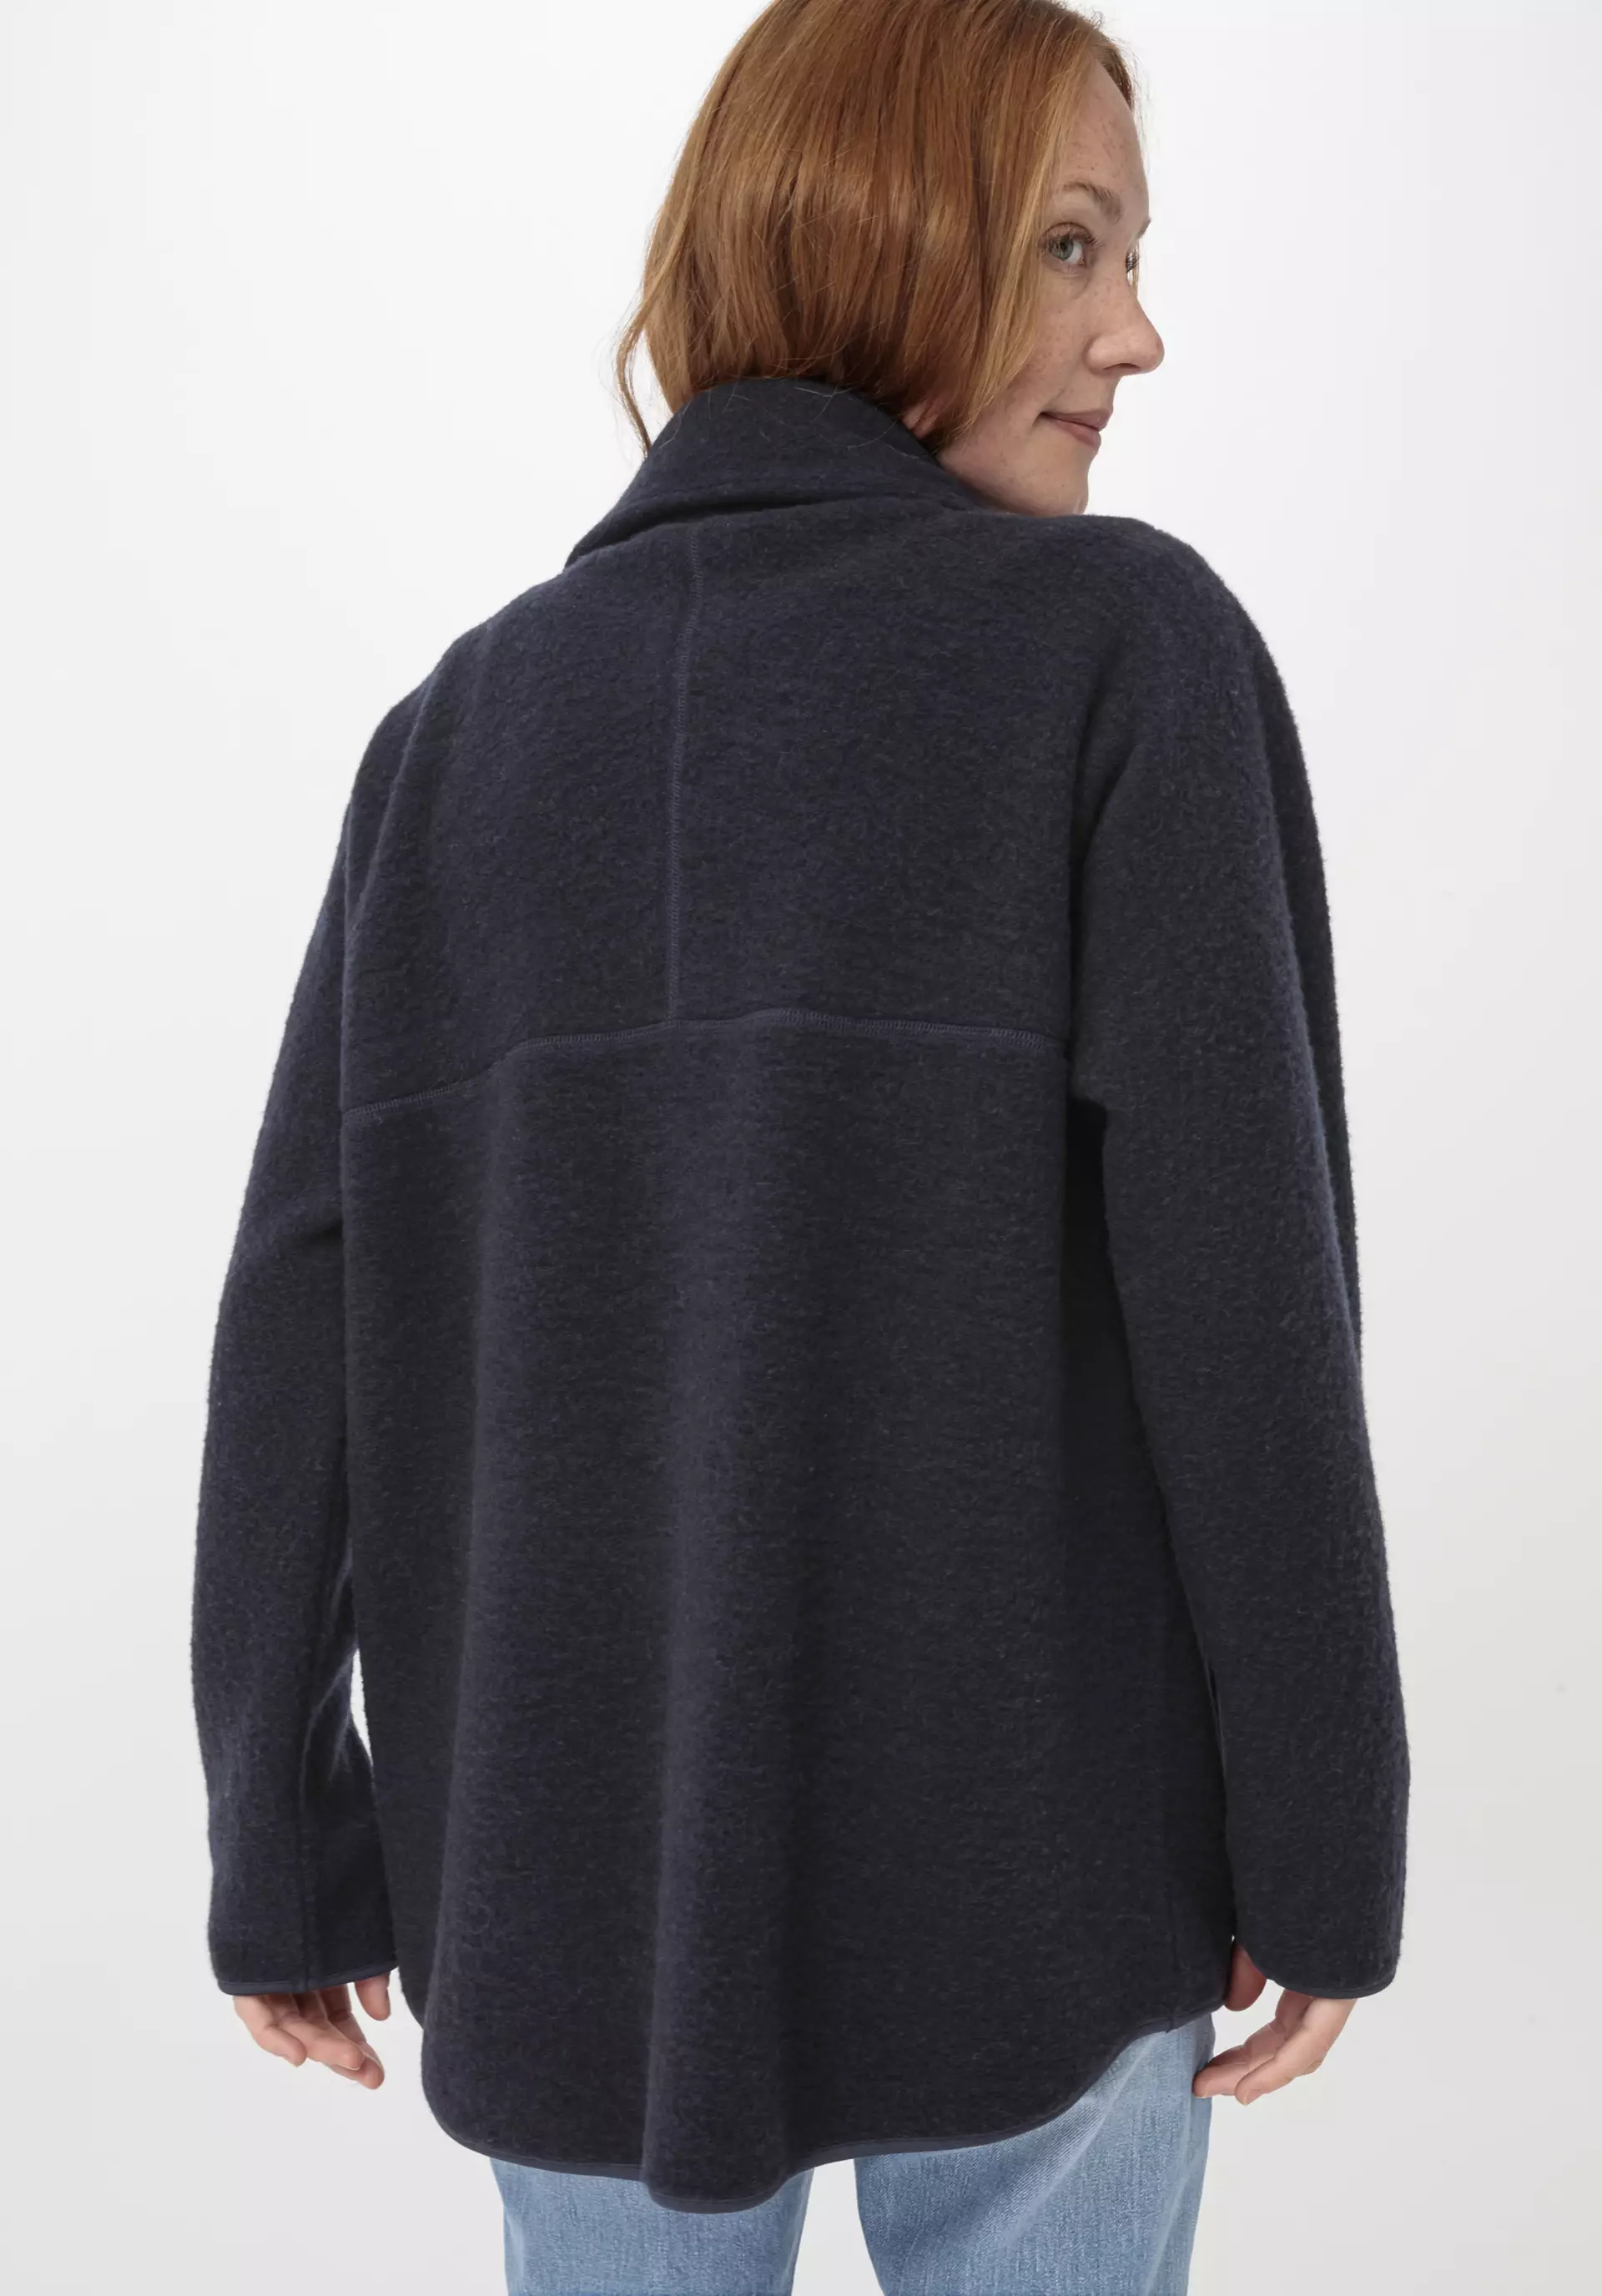 Wool fleece jacket made from pure organic merino wool - 3